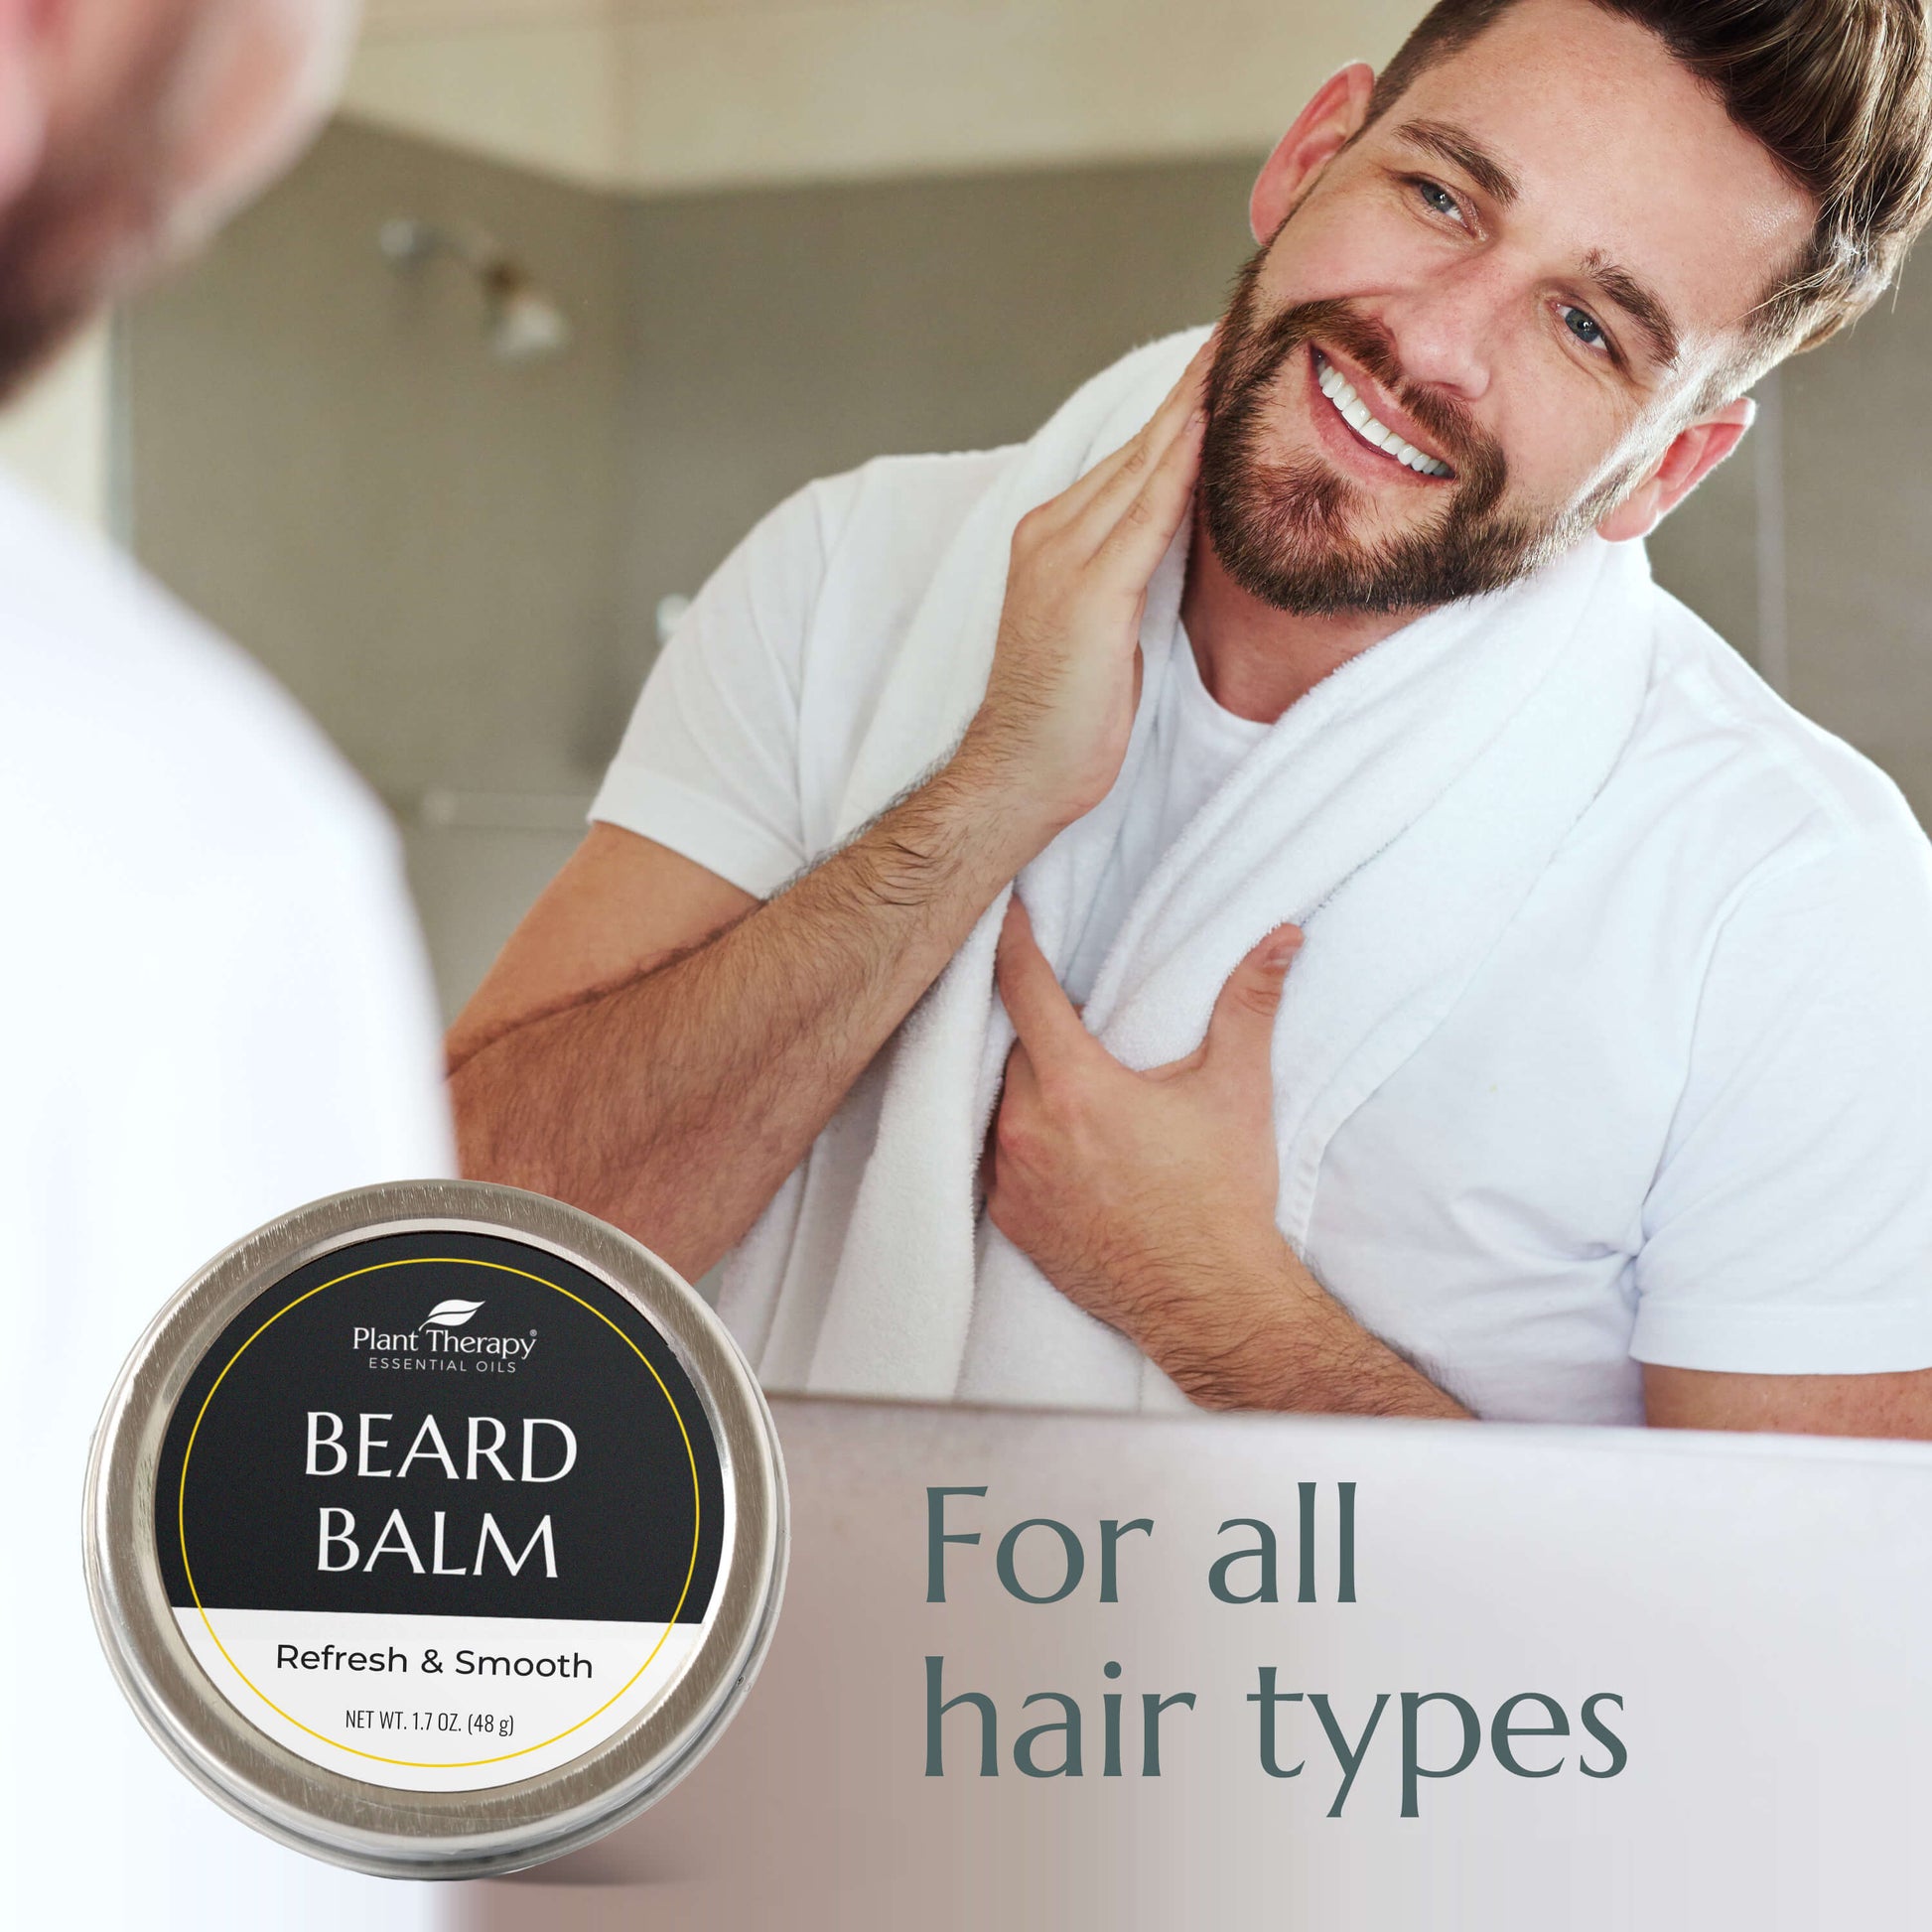 Plant Therapy Hair Therapy Dry Shampoo Powder 1.7 oz Refreshing, Revitalizing, Rejuvenating with Rosemary, Cedarwood & Vitamin E